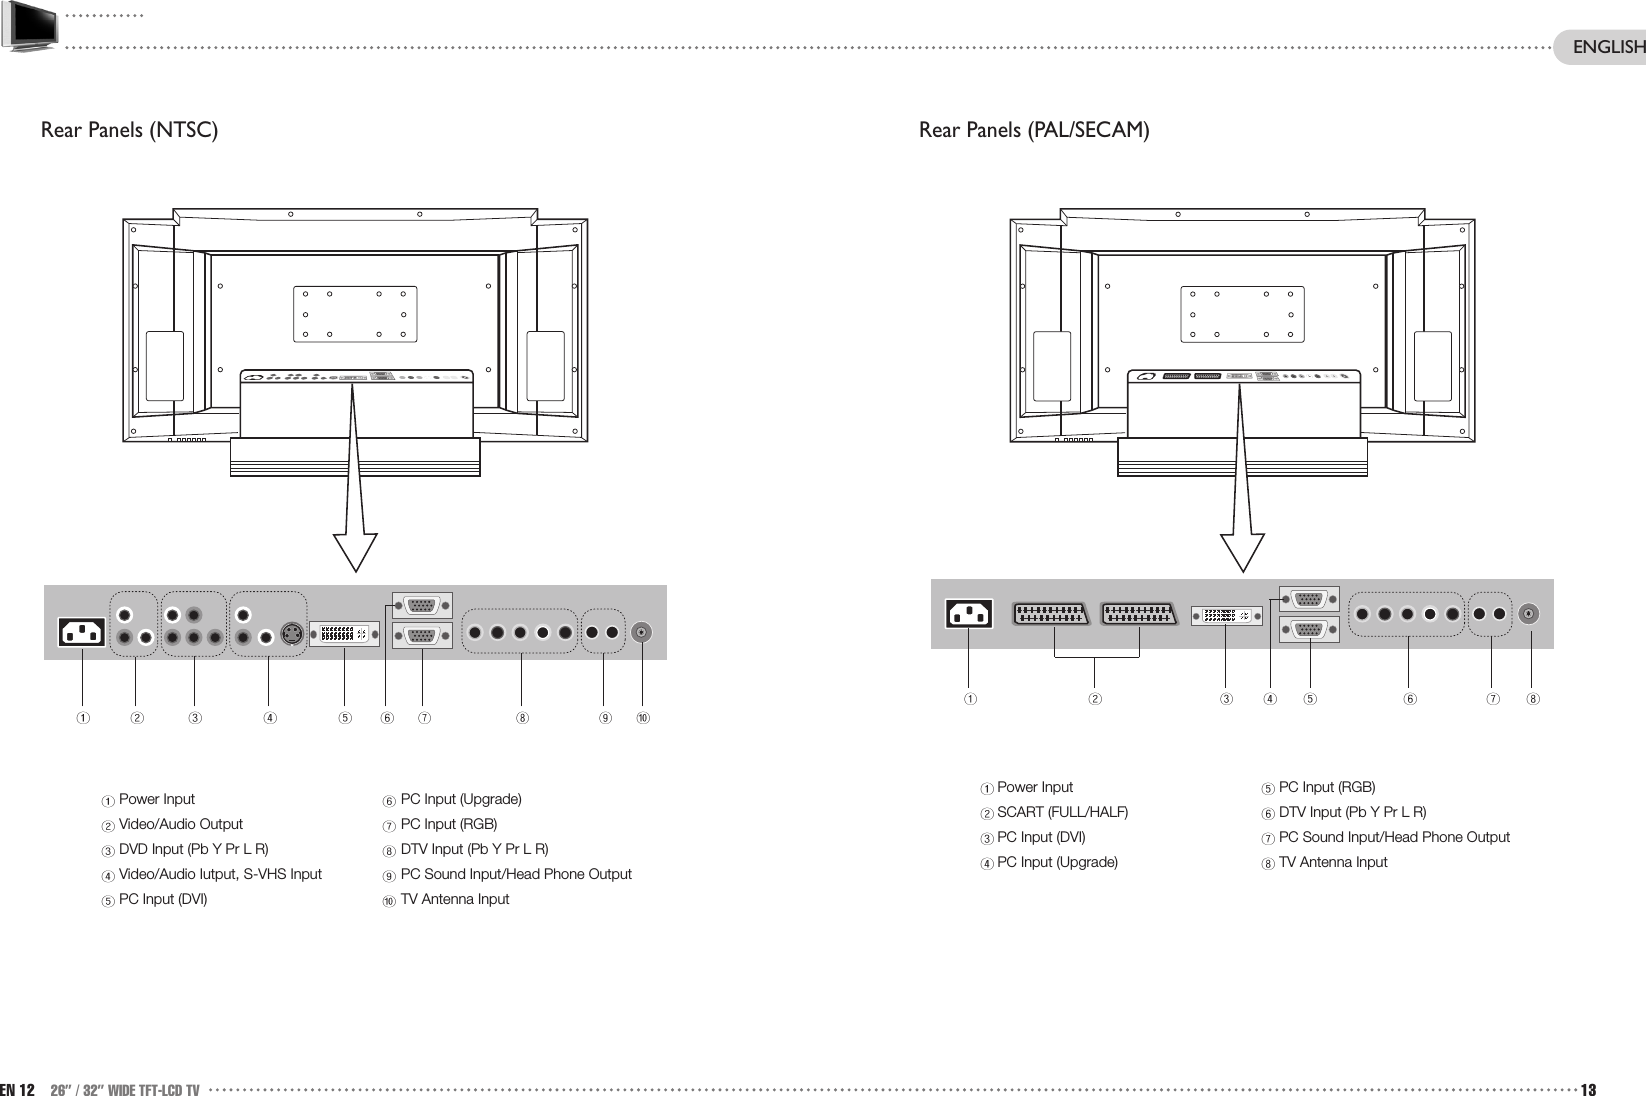 Rear Panels (PAL/SECAM)Power Input PC Input (RGB) SCART (FULL/HALF) DTV Input (Pb Y Pr L R)PC Input (DVI)  PC Sound Input/Head Phone OutputPC Input (Upgrade)  TV Antenna Input13ENGLISHEN 12 26” / 32” WIDE TFT-LCD TVRear Panels (NTSC)Power Input PC Input (Upgrade)Video/Audio Output PC Input (RGB)DVD Input (Pb Y Pr L R) DTV Input (Pb Y Pr L R)Video/Audio Iutput, S-VHS Input PC Sound Input/Head Phone OutputPC Input (DVI) TV Antenna Input